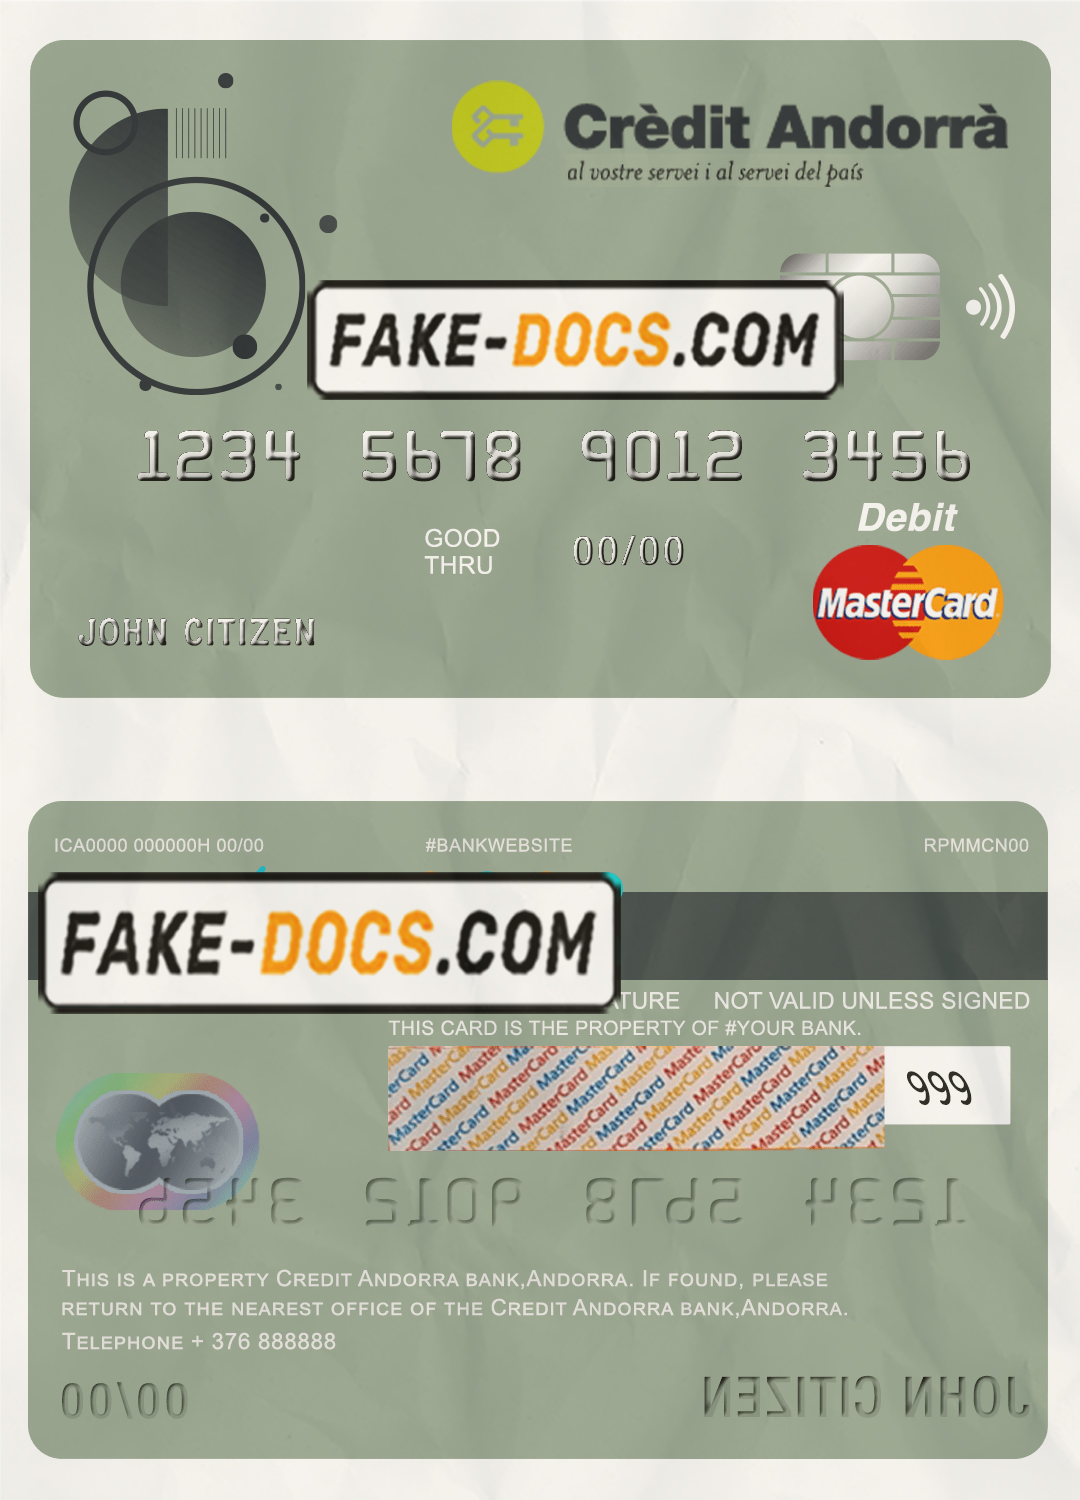 Andorra Credit Andorra bank mastercard debit card template in PSD format, fully editable scan